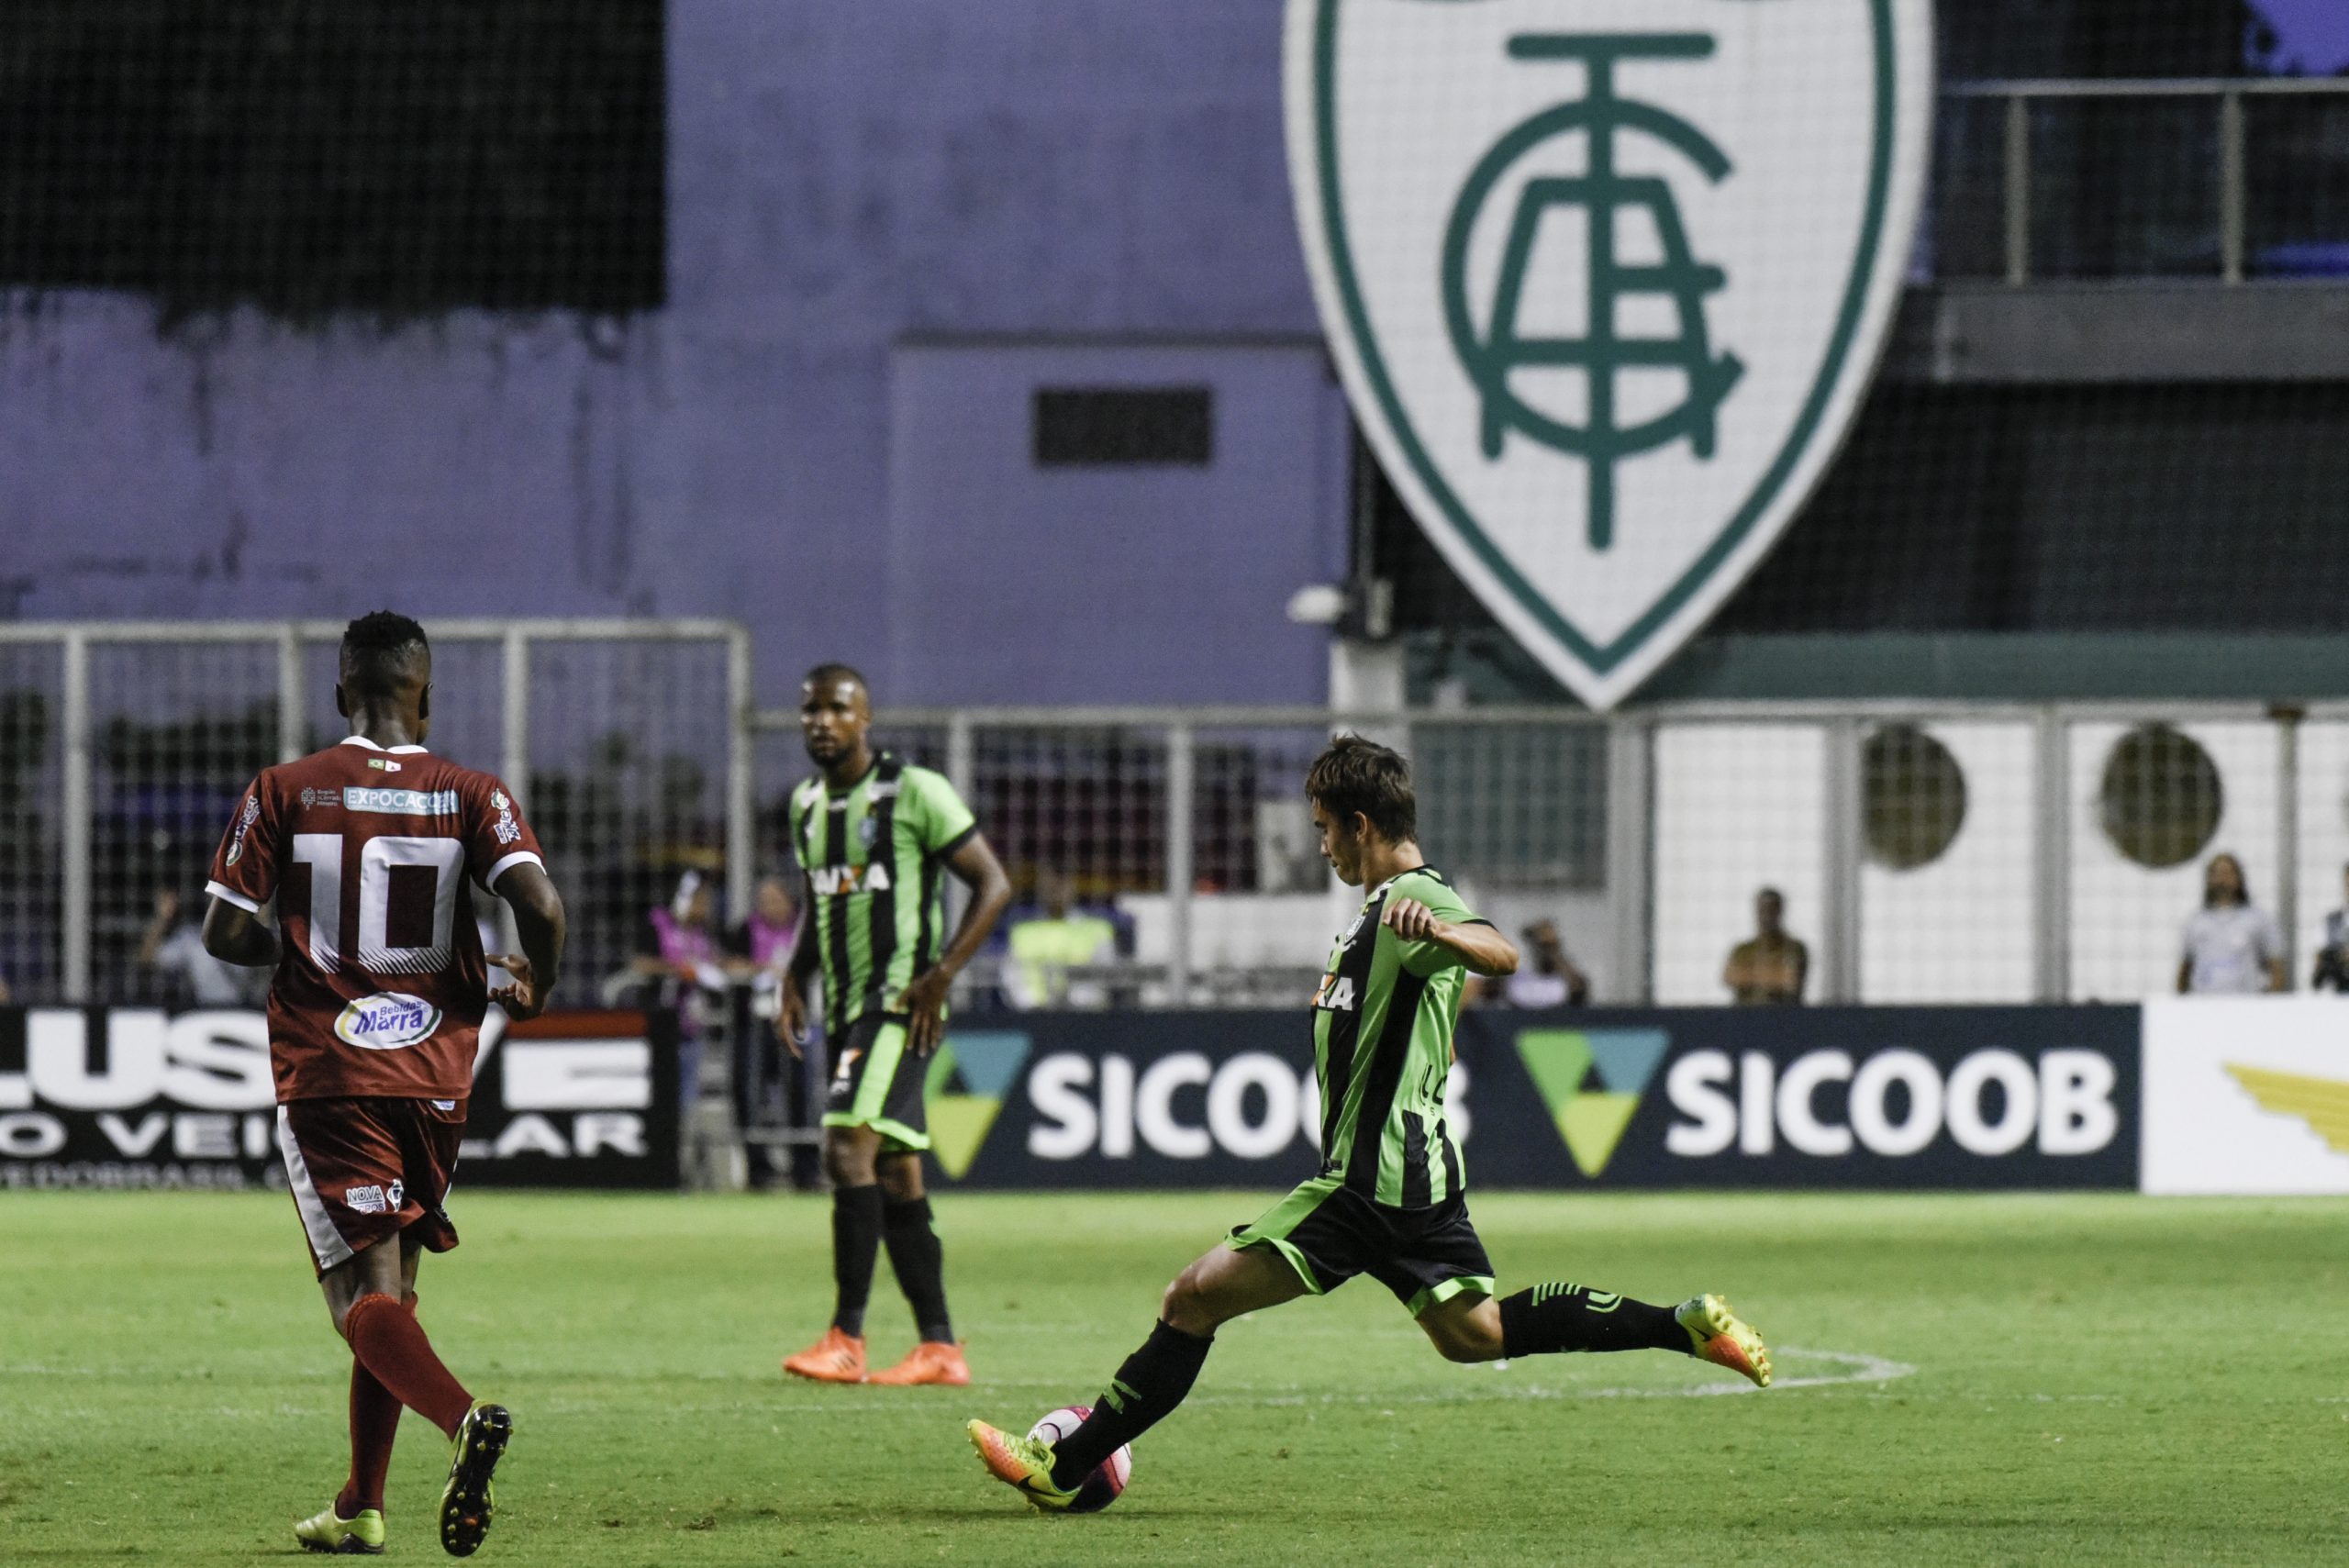 De volta ao Independência, América-MG recebe a Patrocinense pelo Mineiro